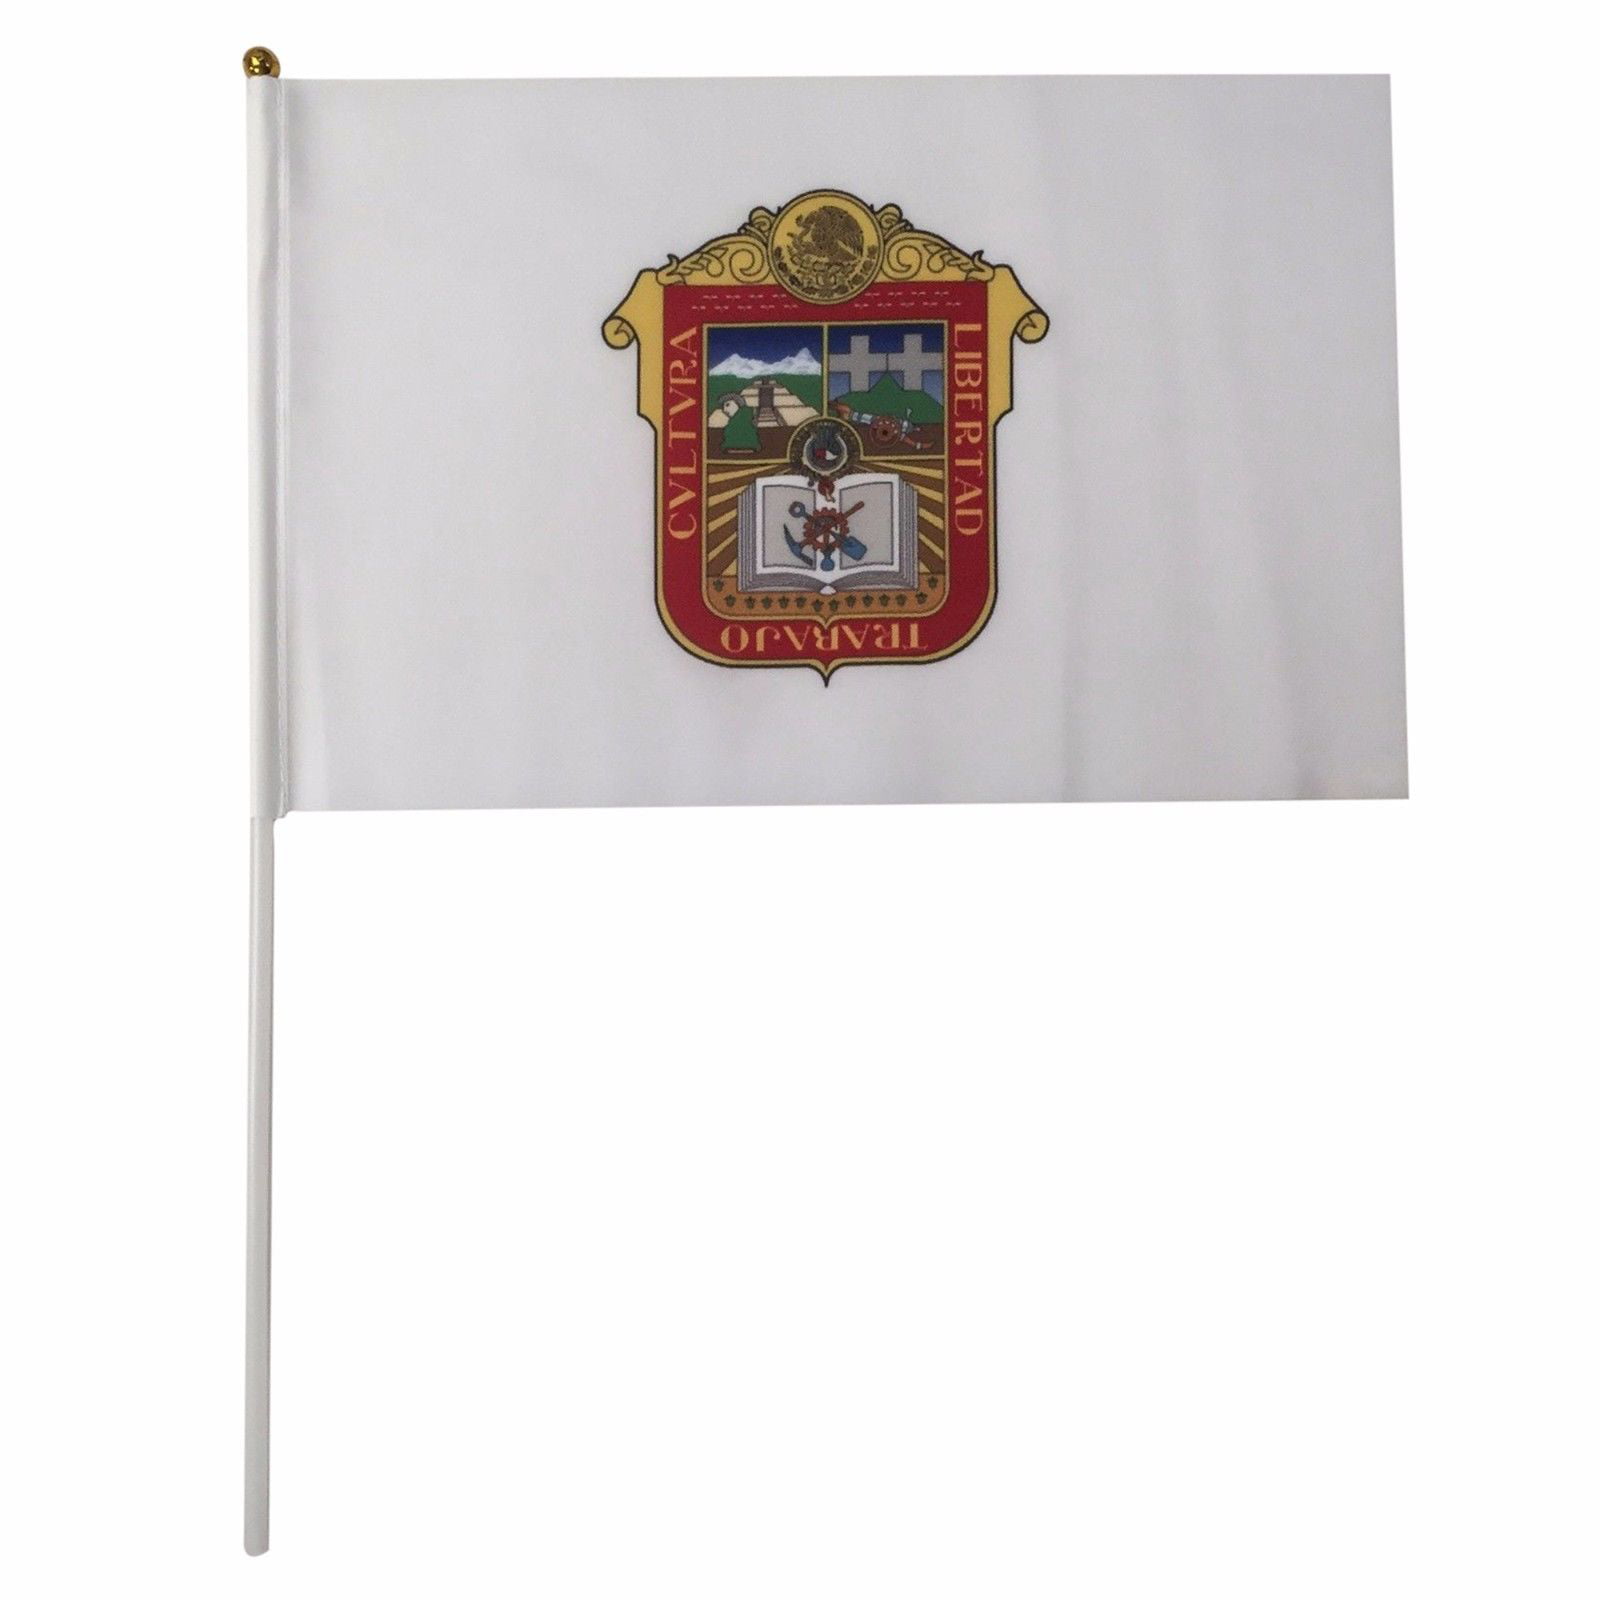 Coahulia State 12-Pack 4x6 Inch Hand Waving Desk Flags #20 